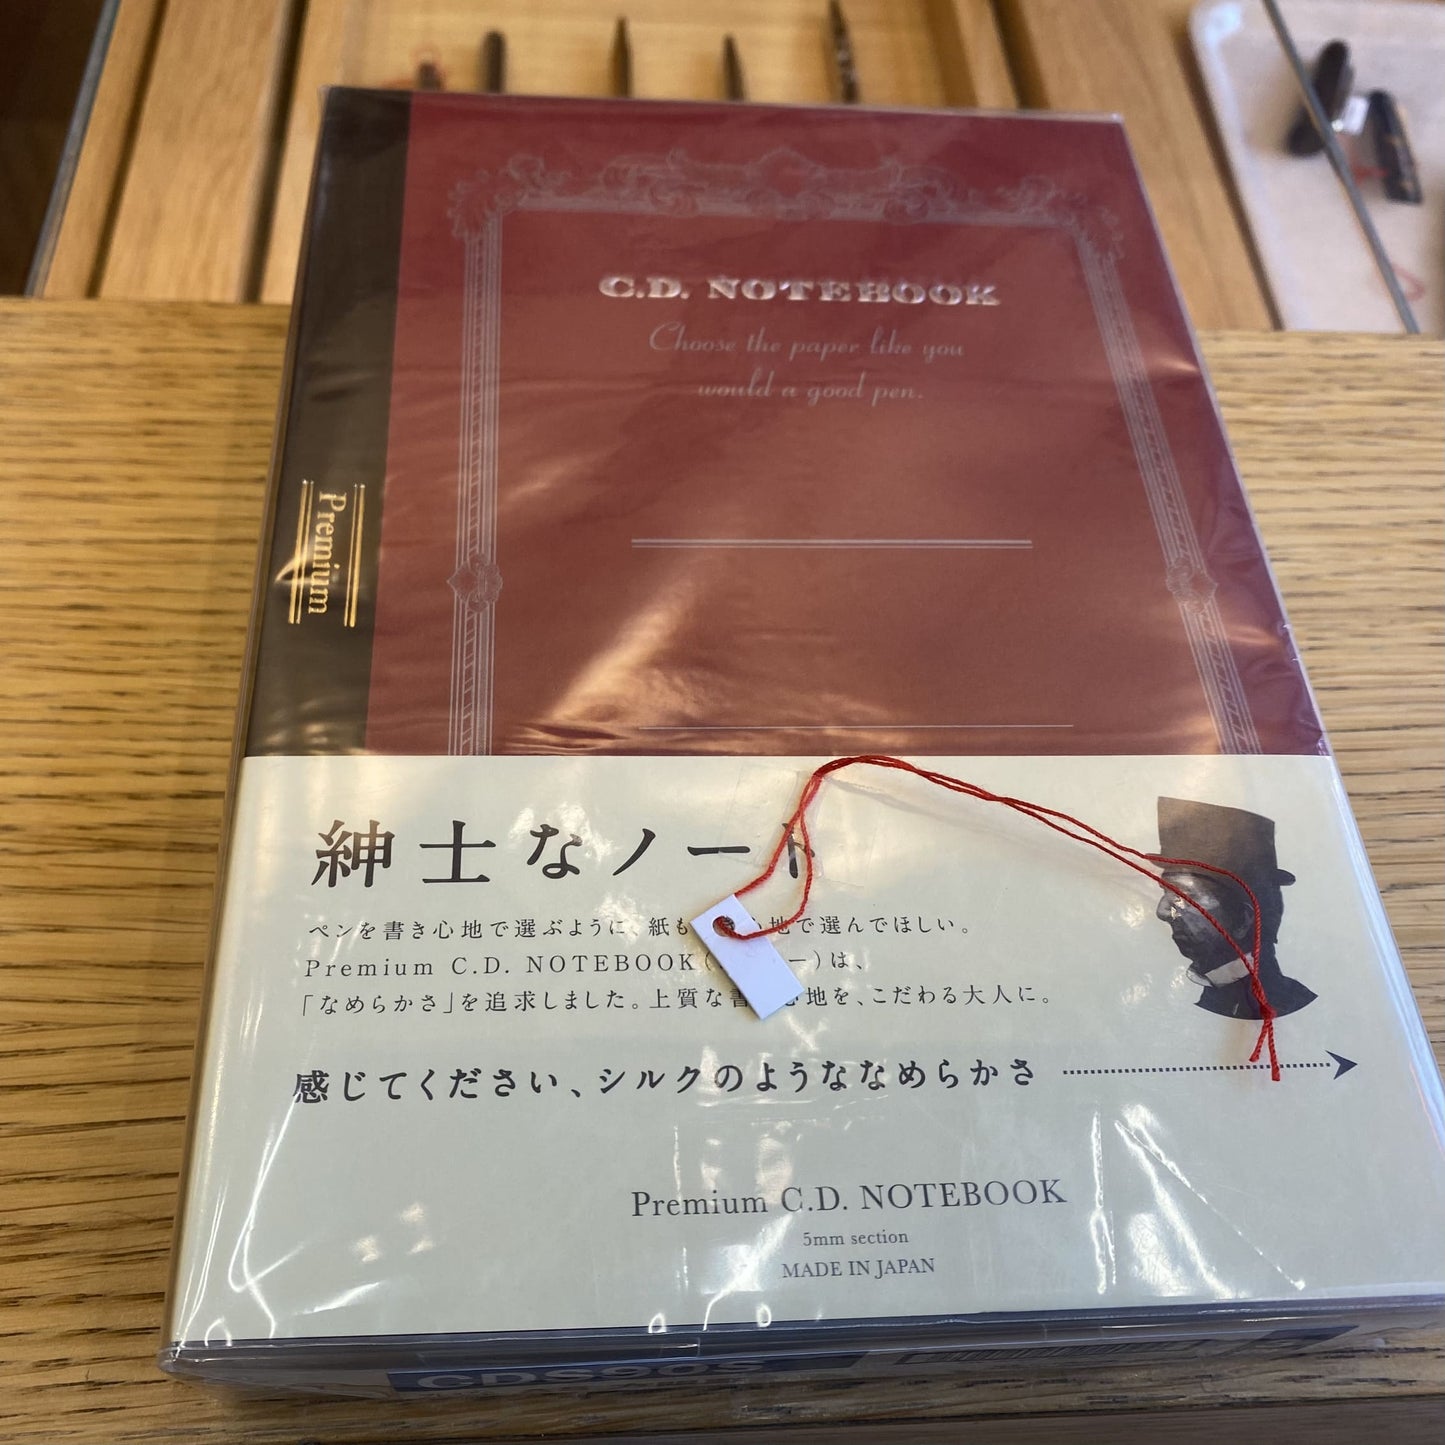 Japanese notebook